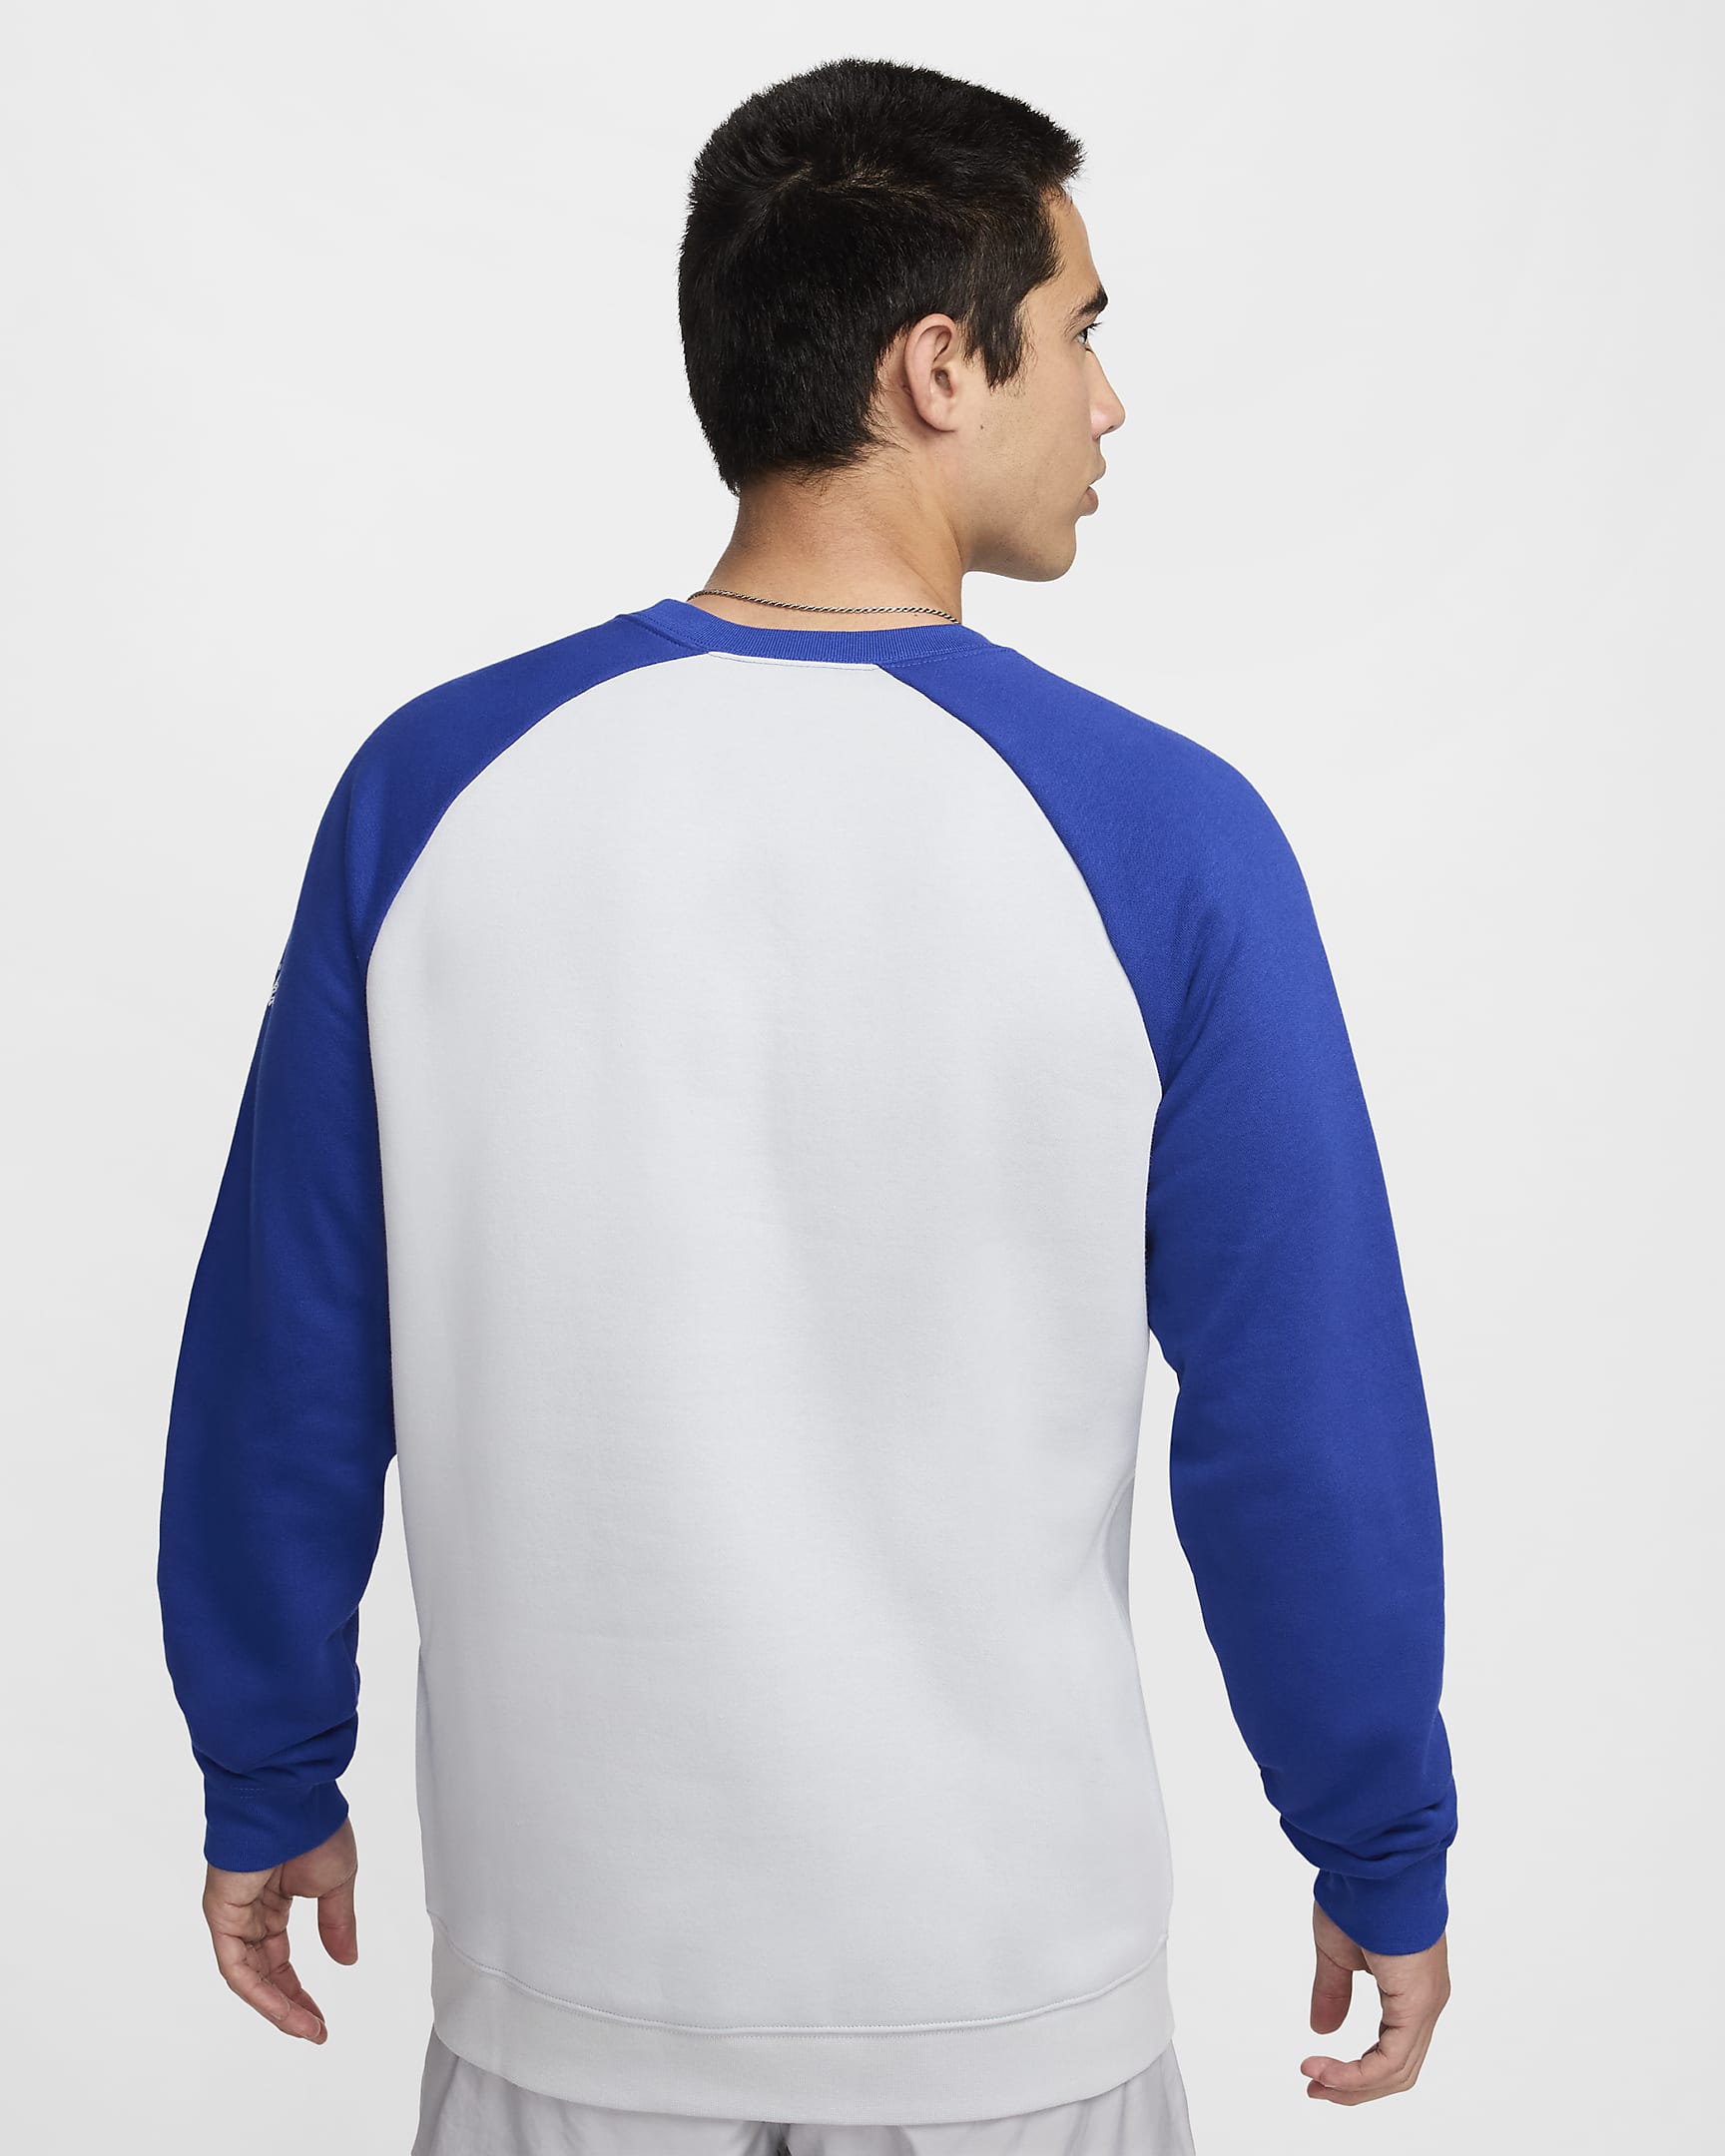 Nike Historic Raglan (NFL Patriots) Men's Sweatshirt. Nike NL